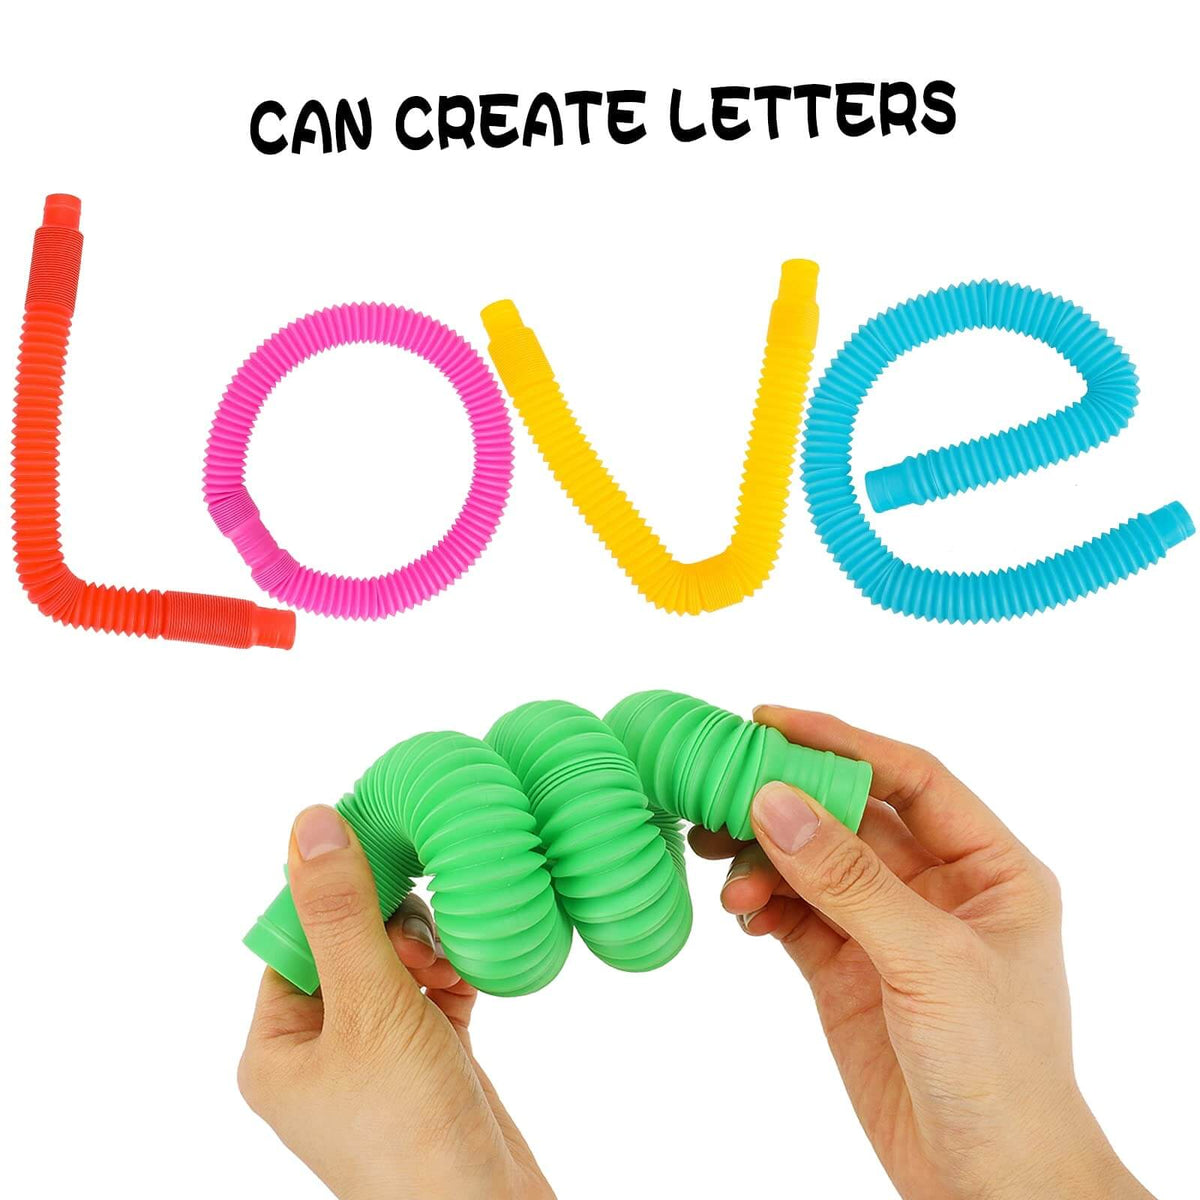 LOVE word created from pop tube fidget